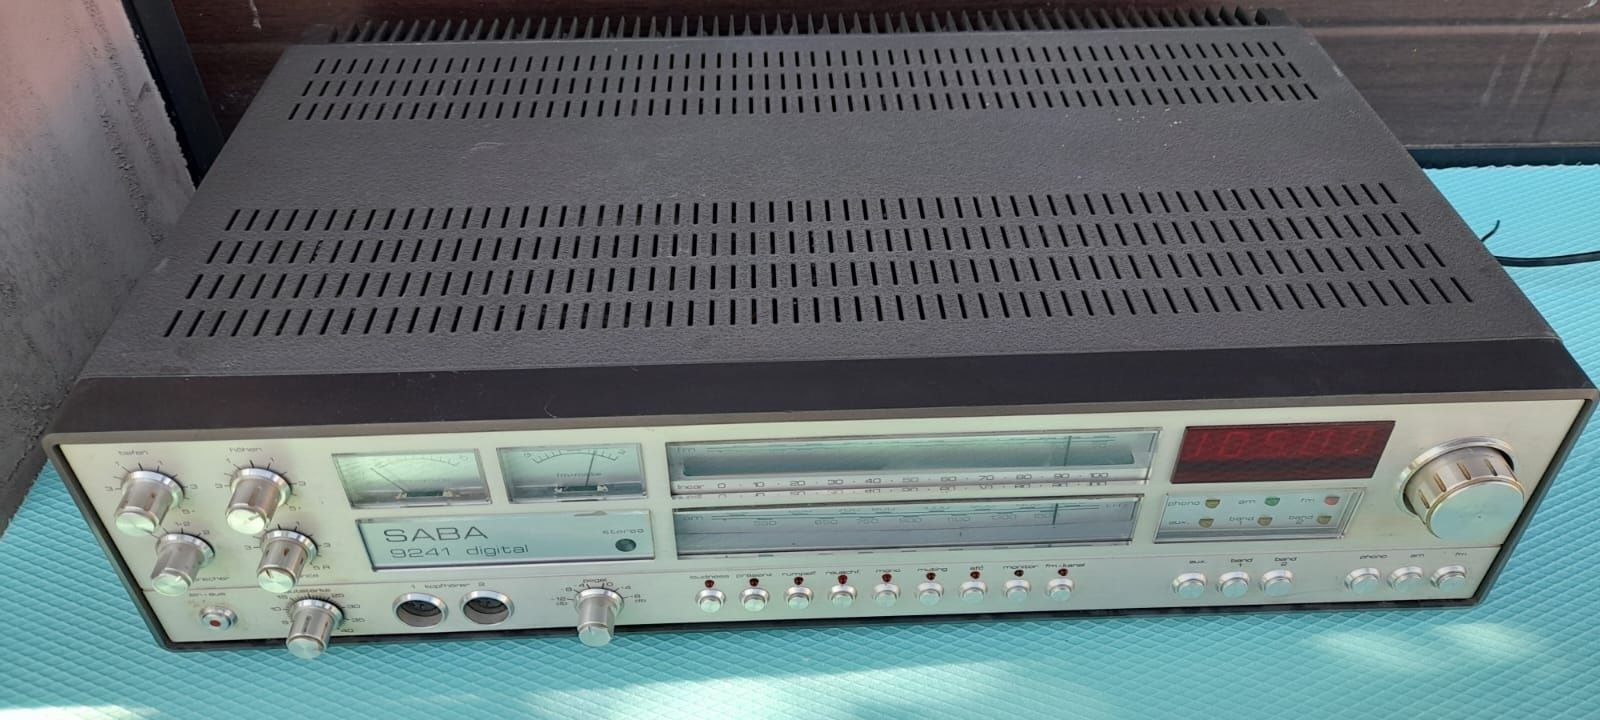 Statie / amplificator profesional audio Saba 9241 digital tuner